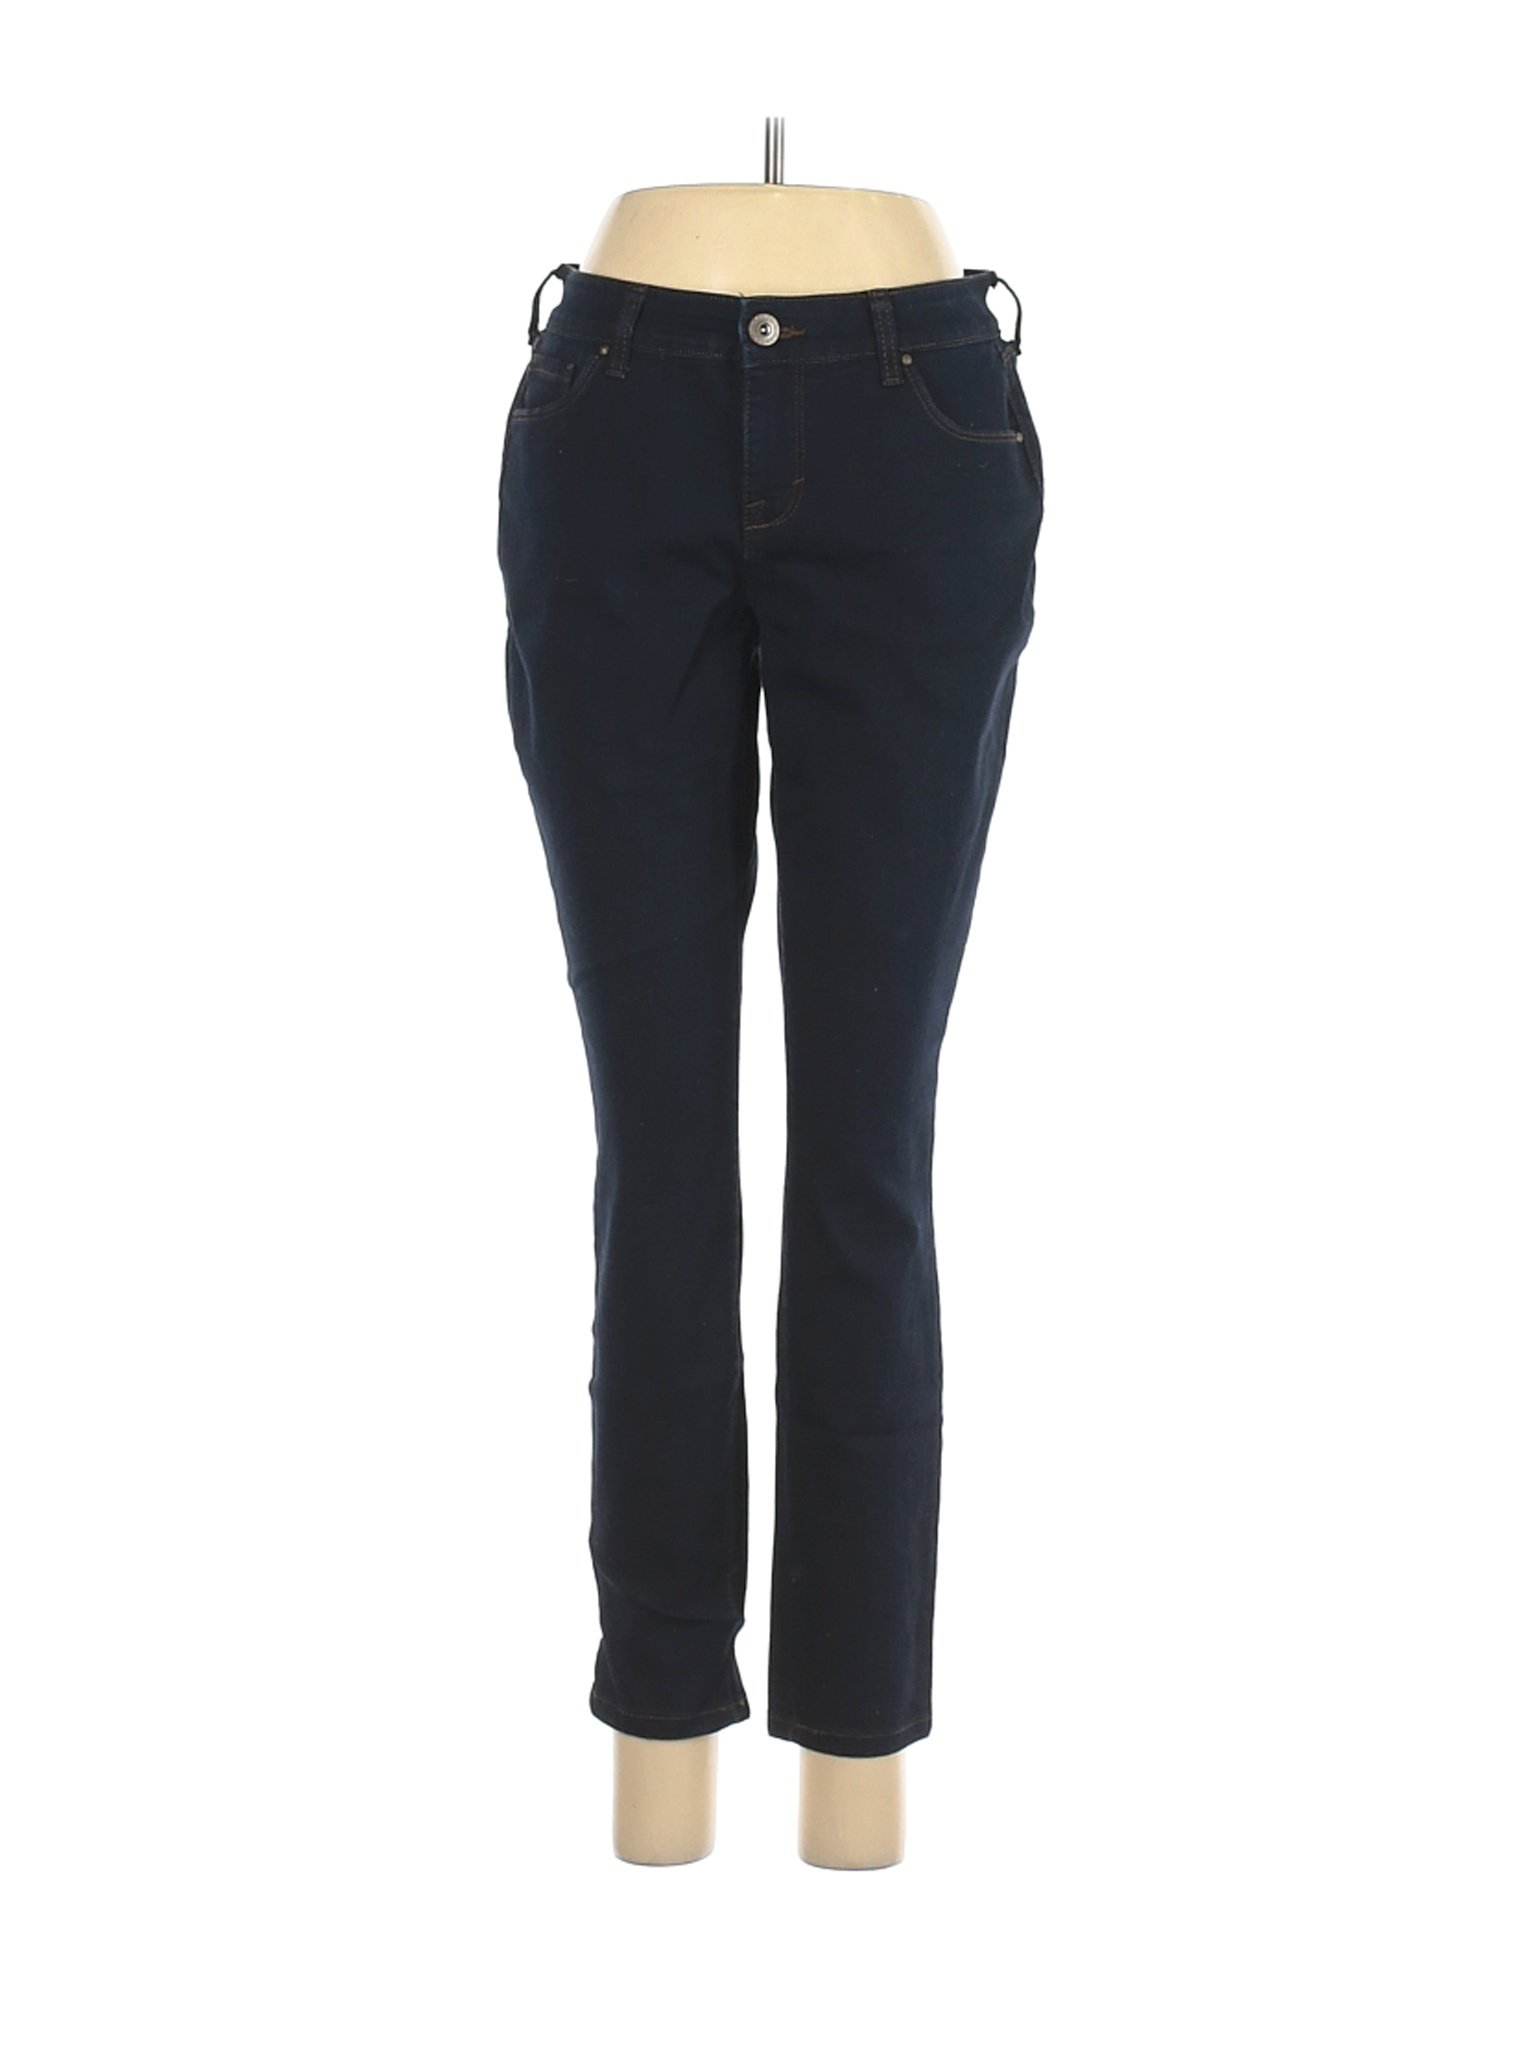 Style&Co Women Black Jeans 6 Petites | eBay